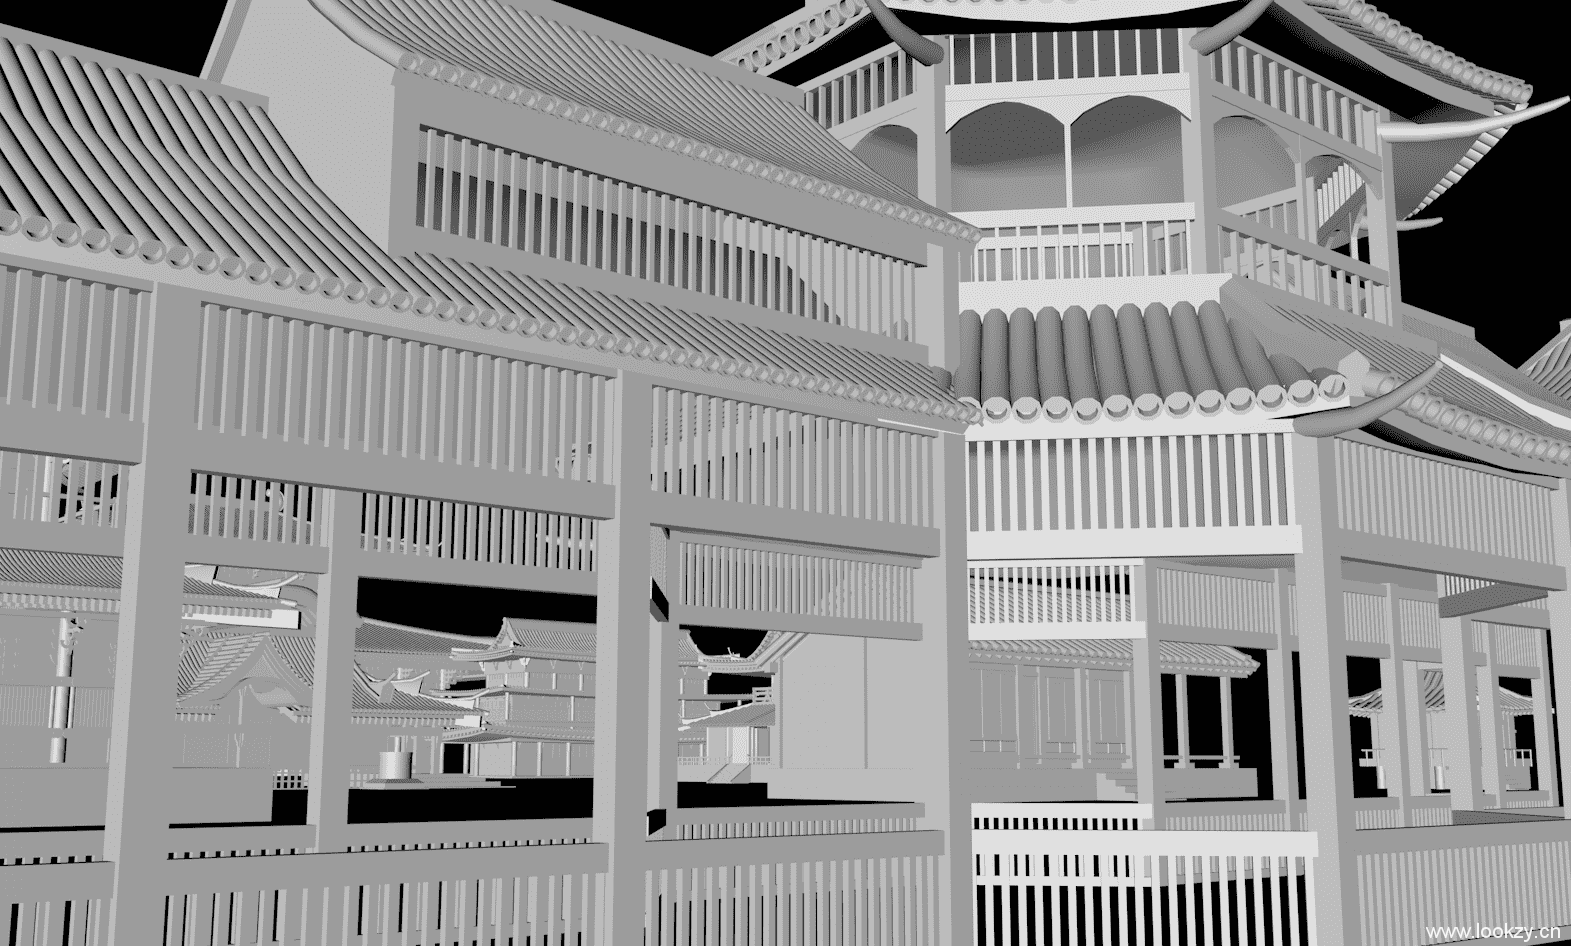 C4D模型-日本古建筑城楼亭台寺庙阁楼住宅模型包